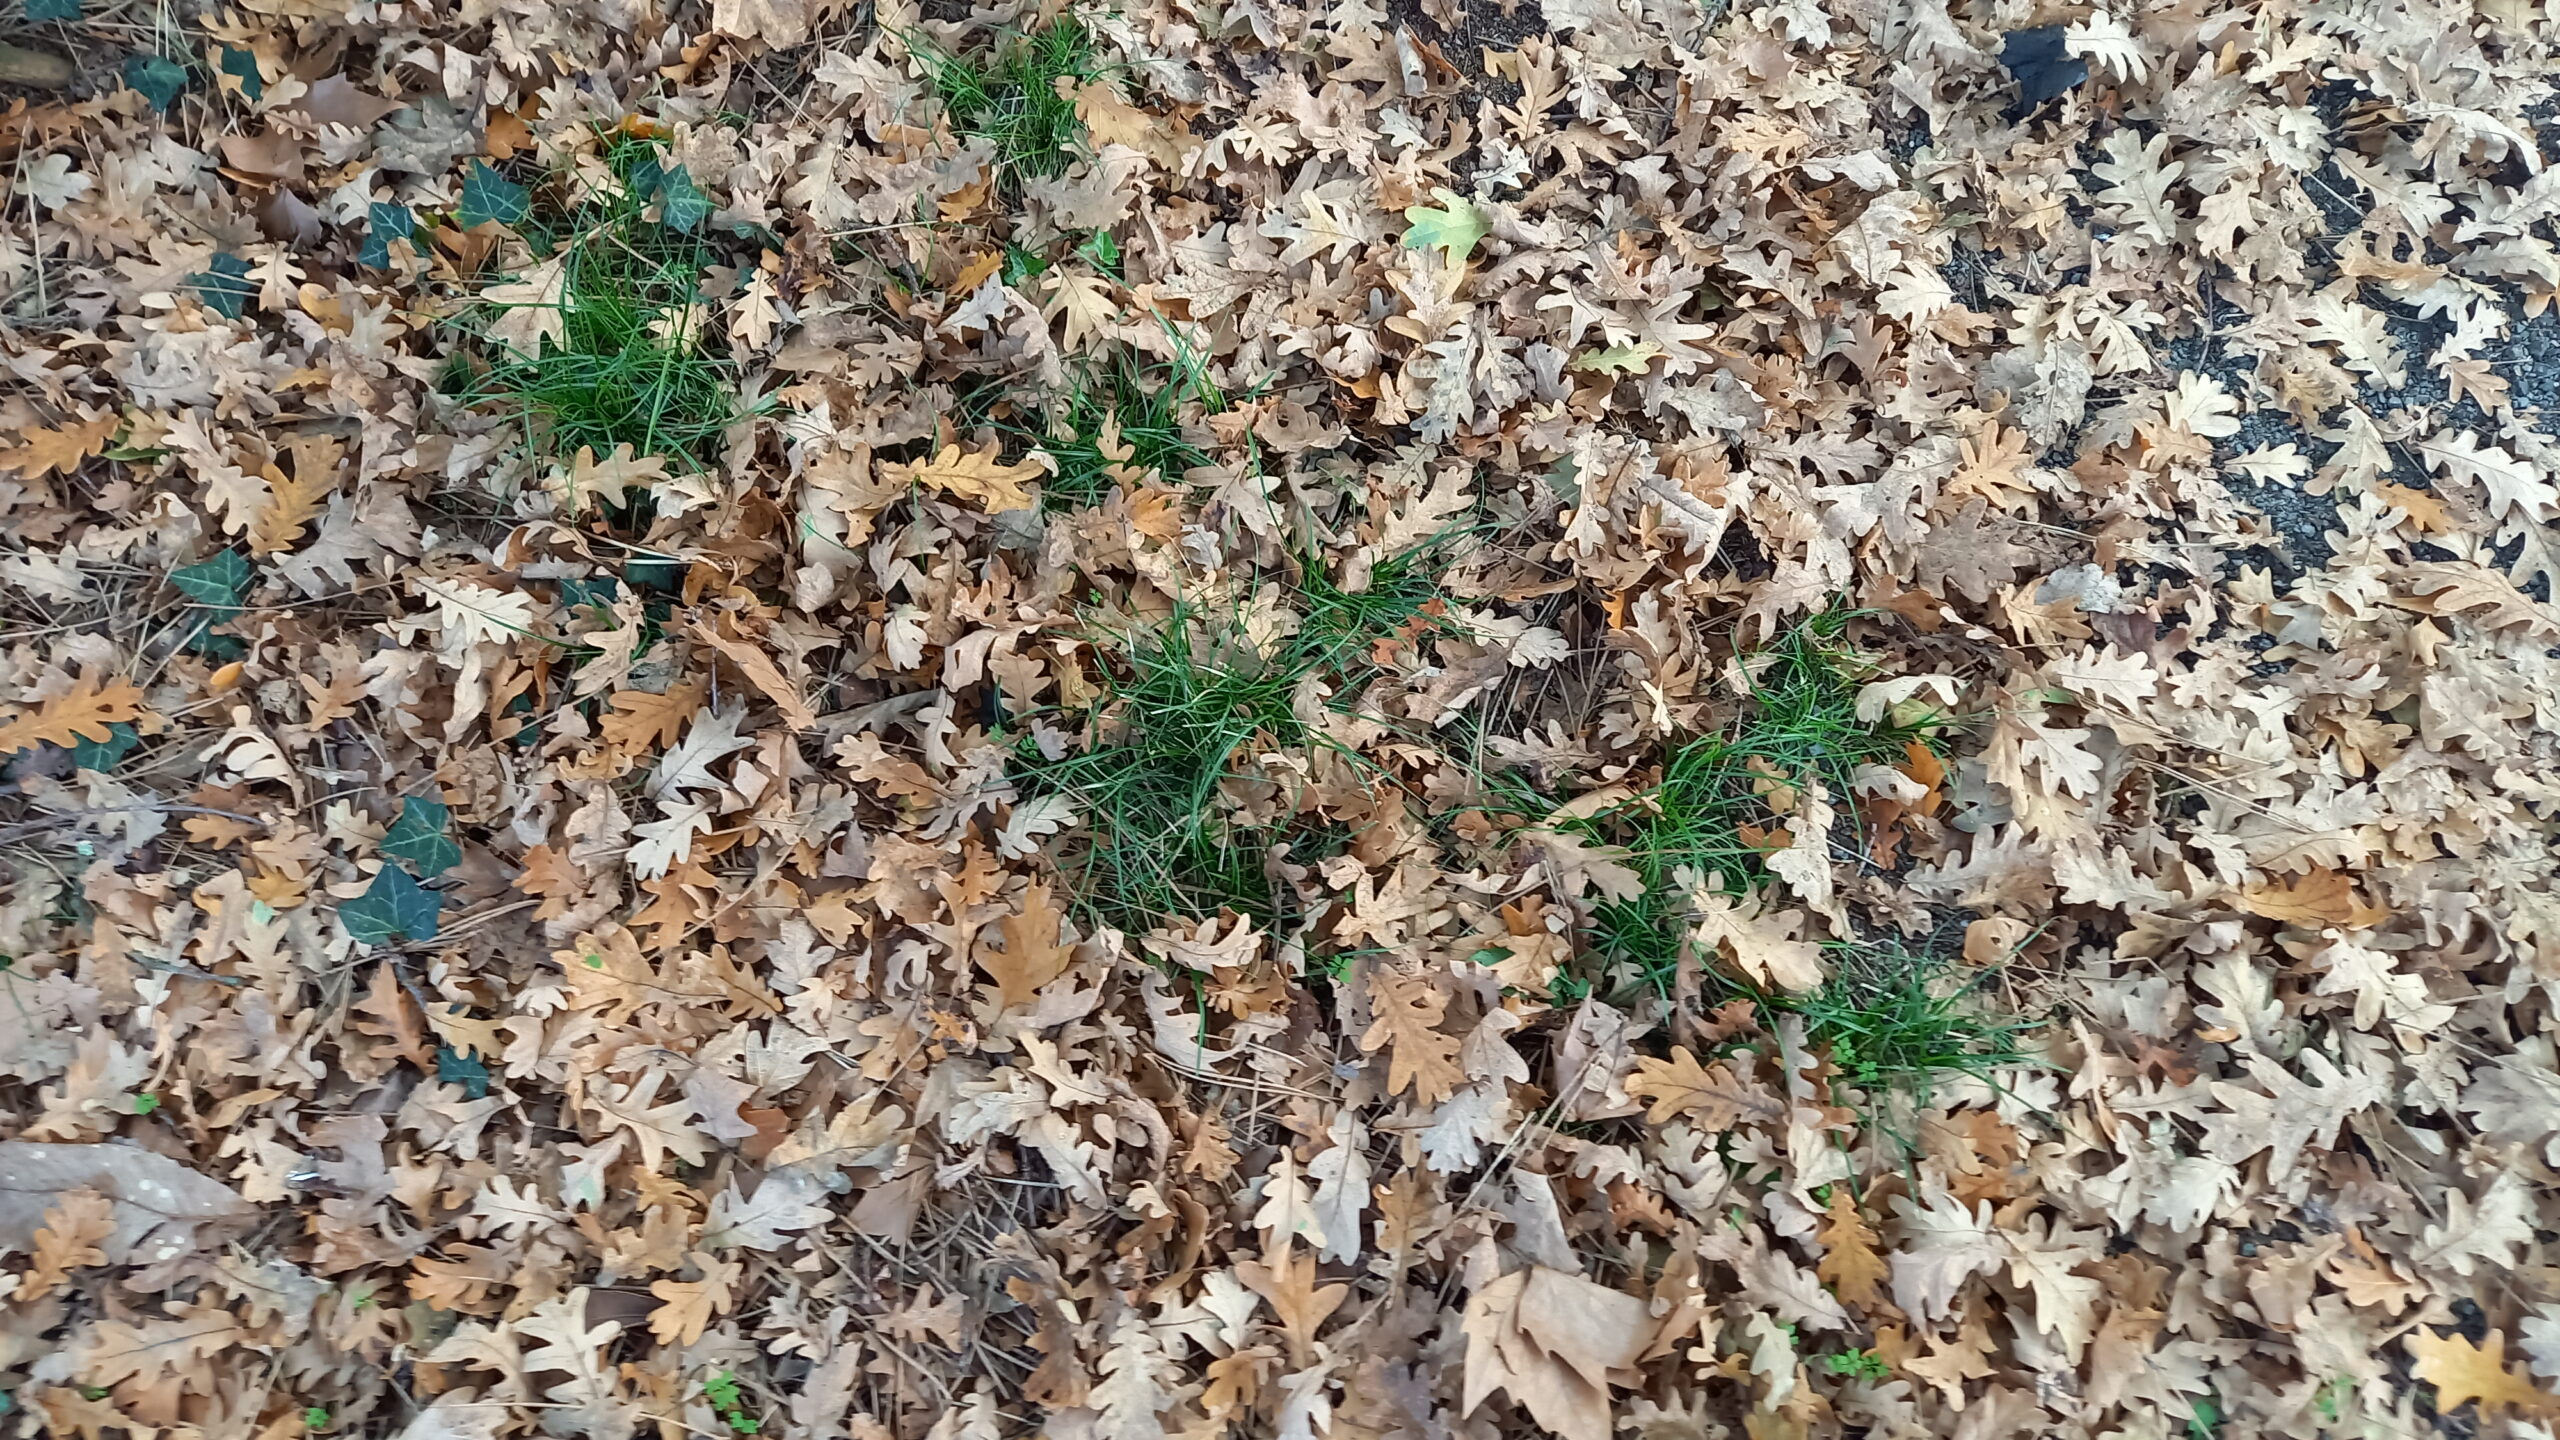 Herbes au milieu de feuilles mortes.